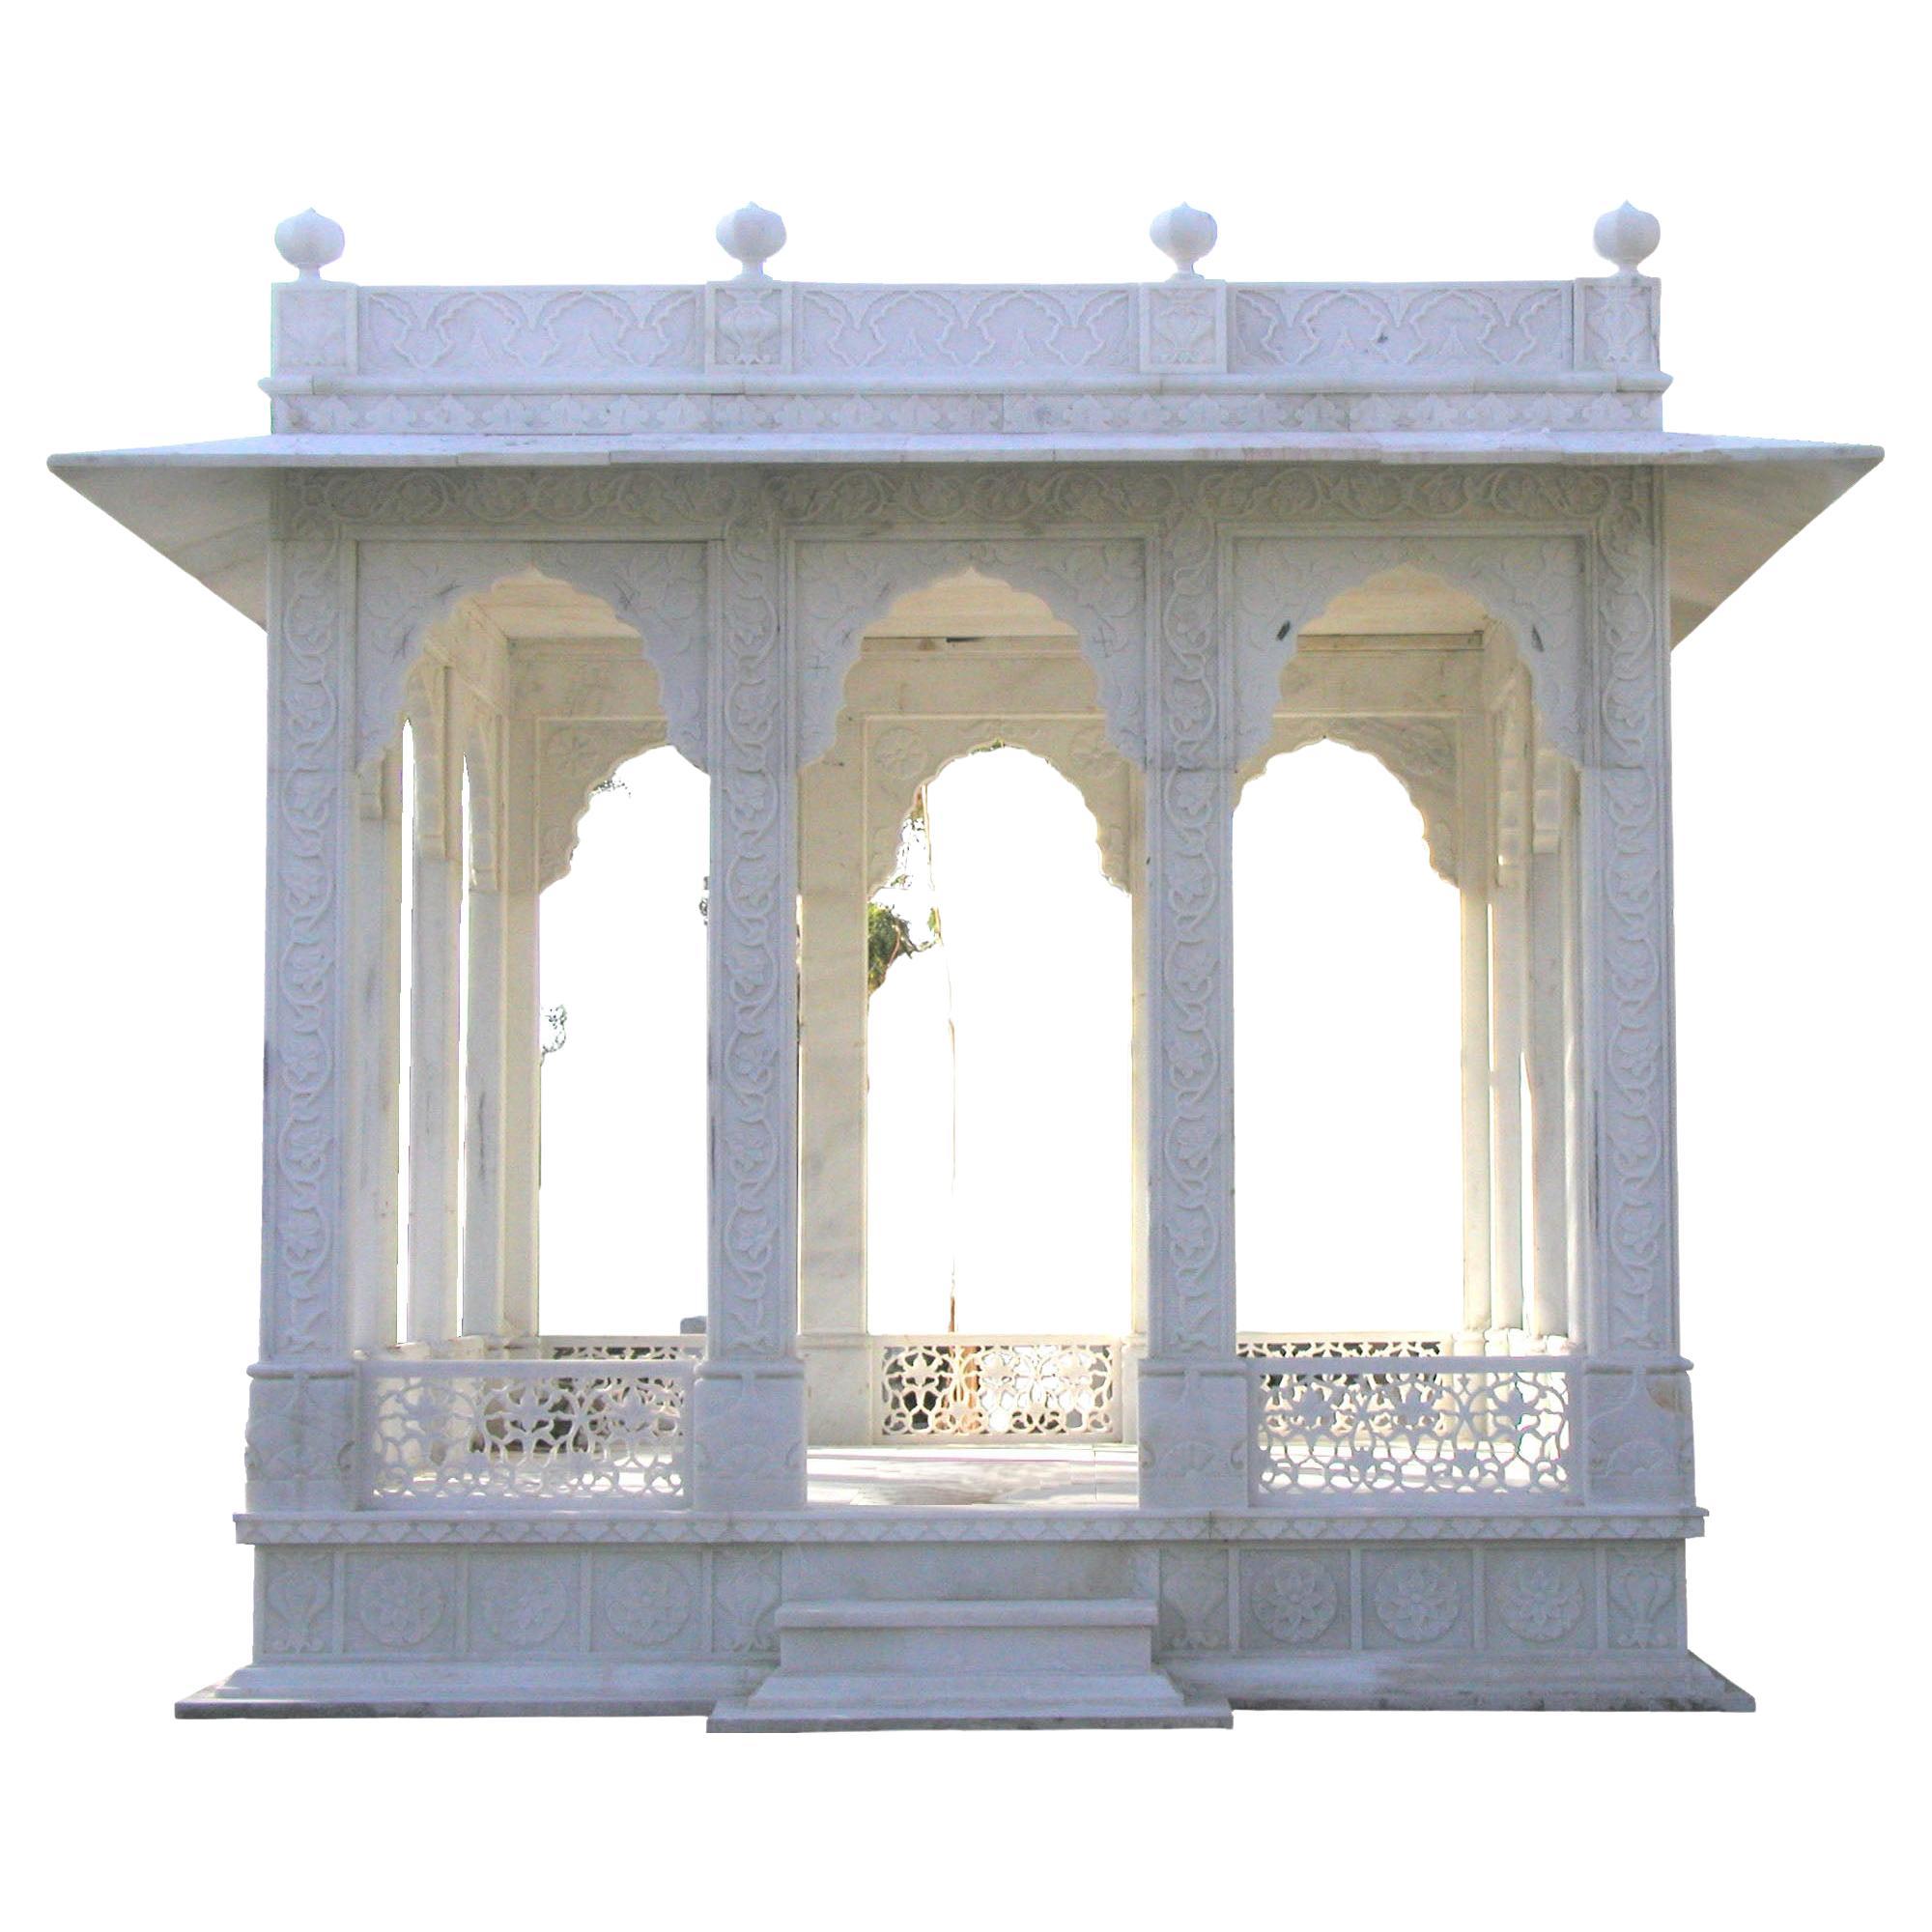 Baradari en marbre blanc Fabriqué à la main en Inde en vente